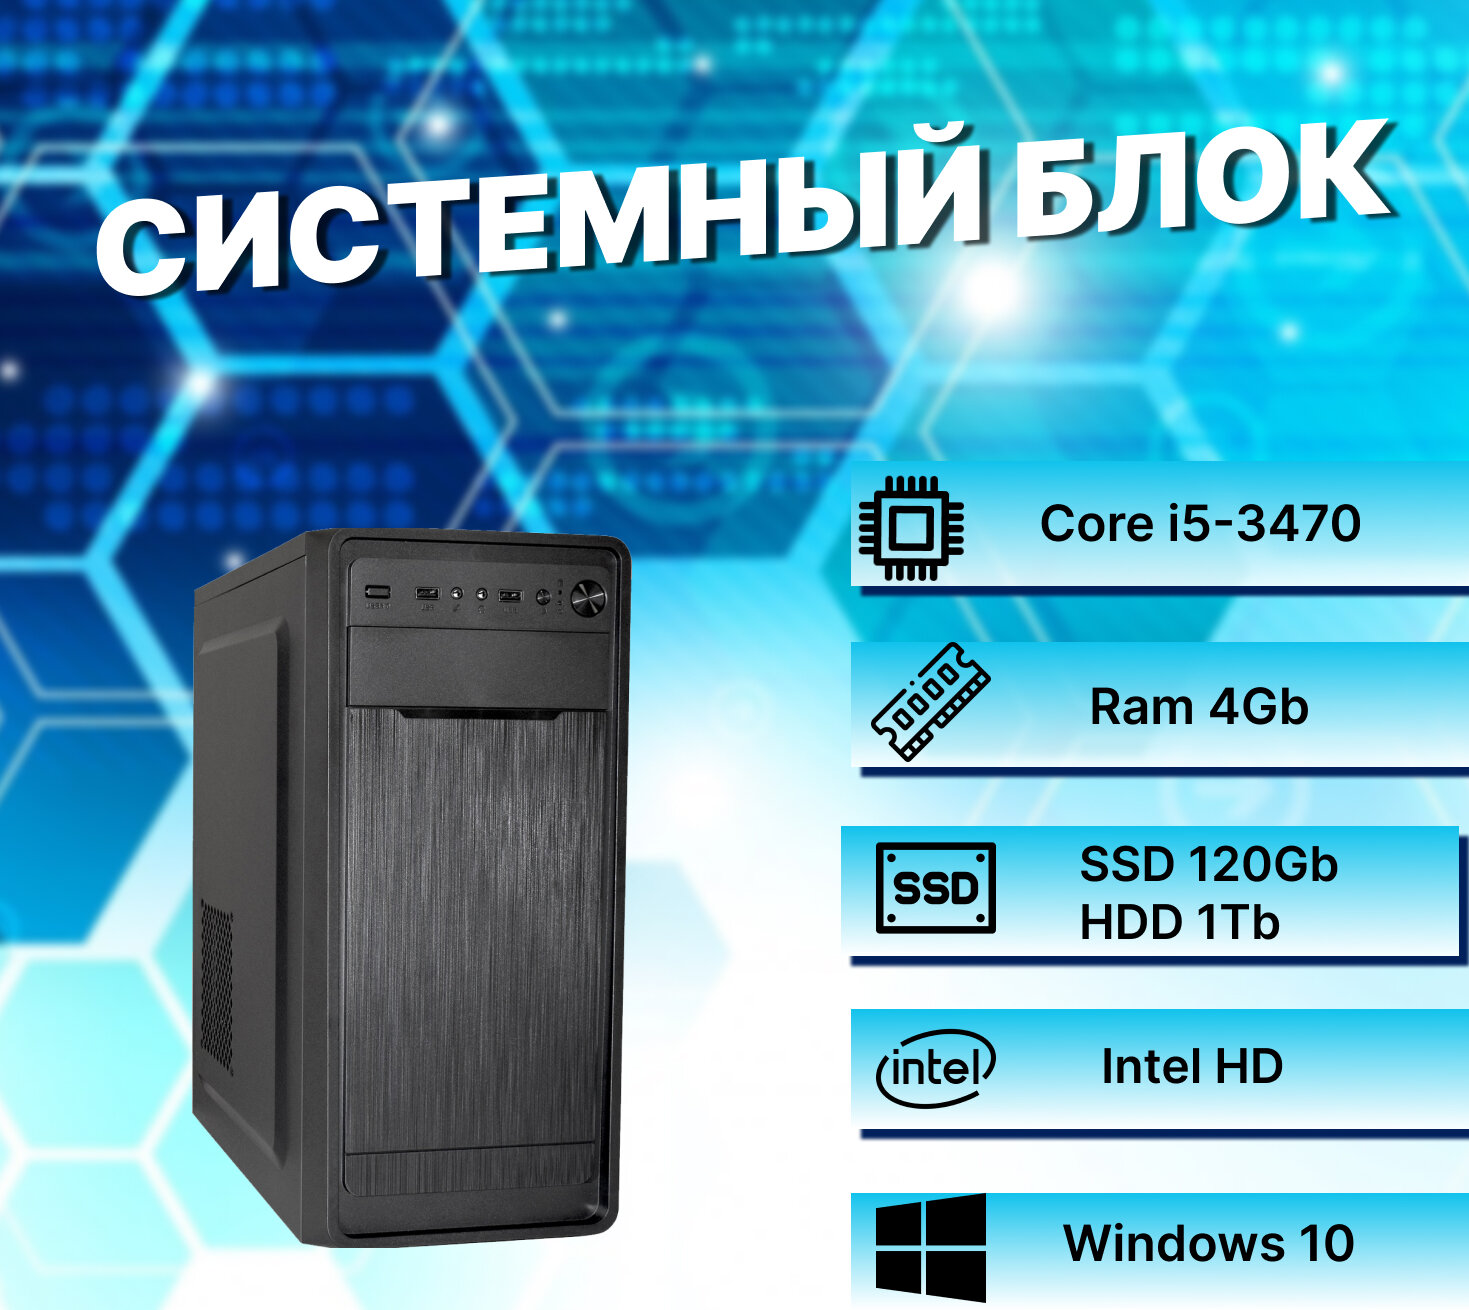 Системный блок Intel Core I5-3470 (3.2ГГц)/ RAM 4Gb/ SSD 120Gb/ HDD 1Tb/ Intel HD/ Windows 10 Pro